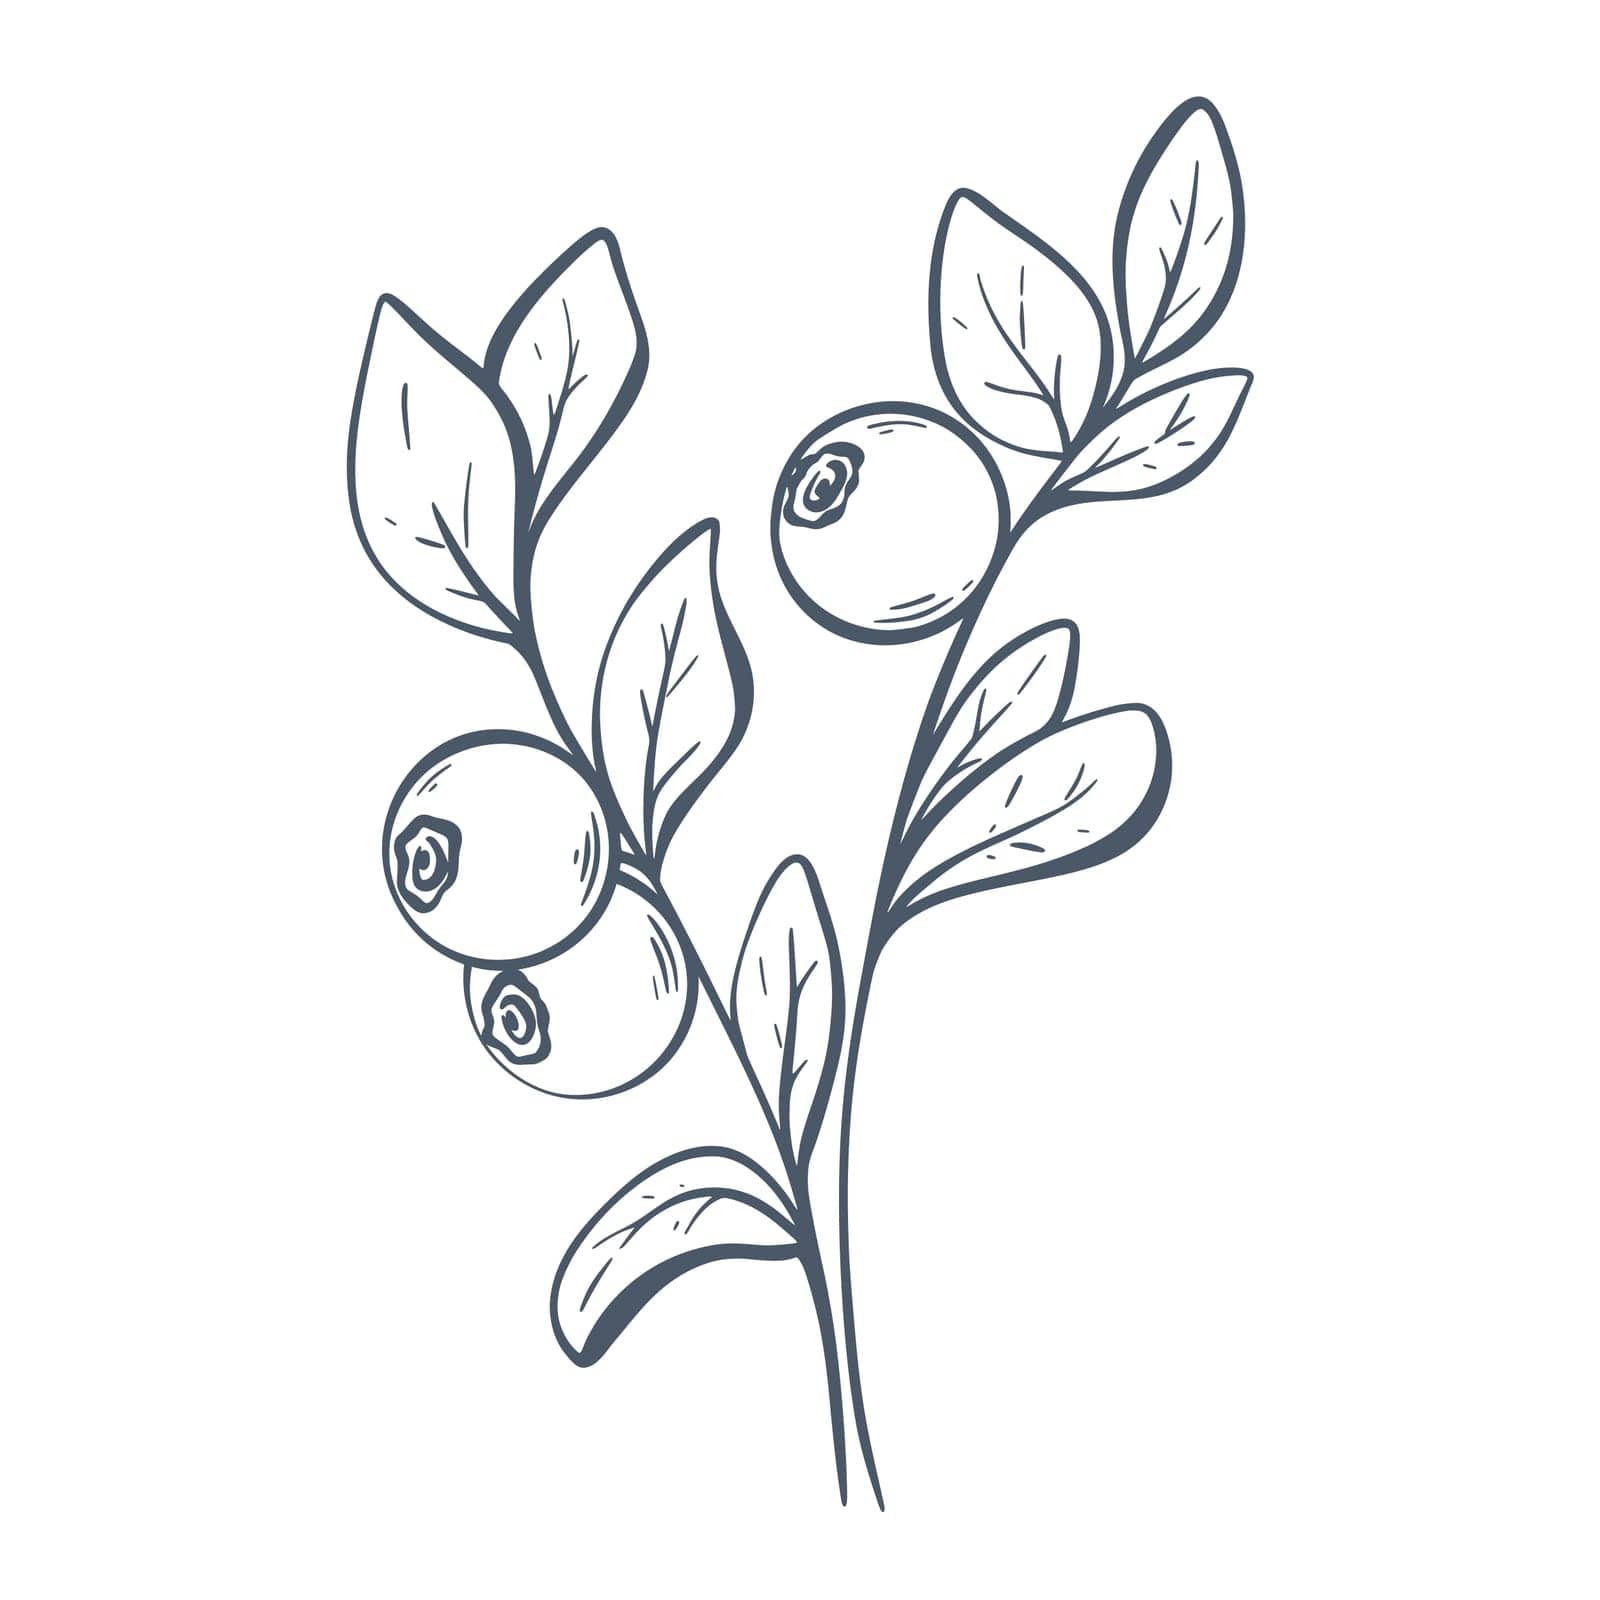 Blueberry on twig ink sketch by TassiaK